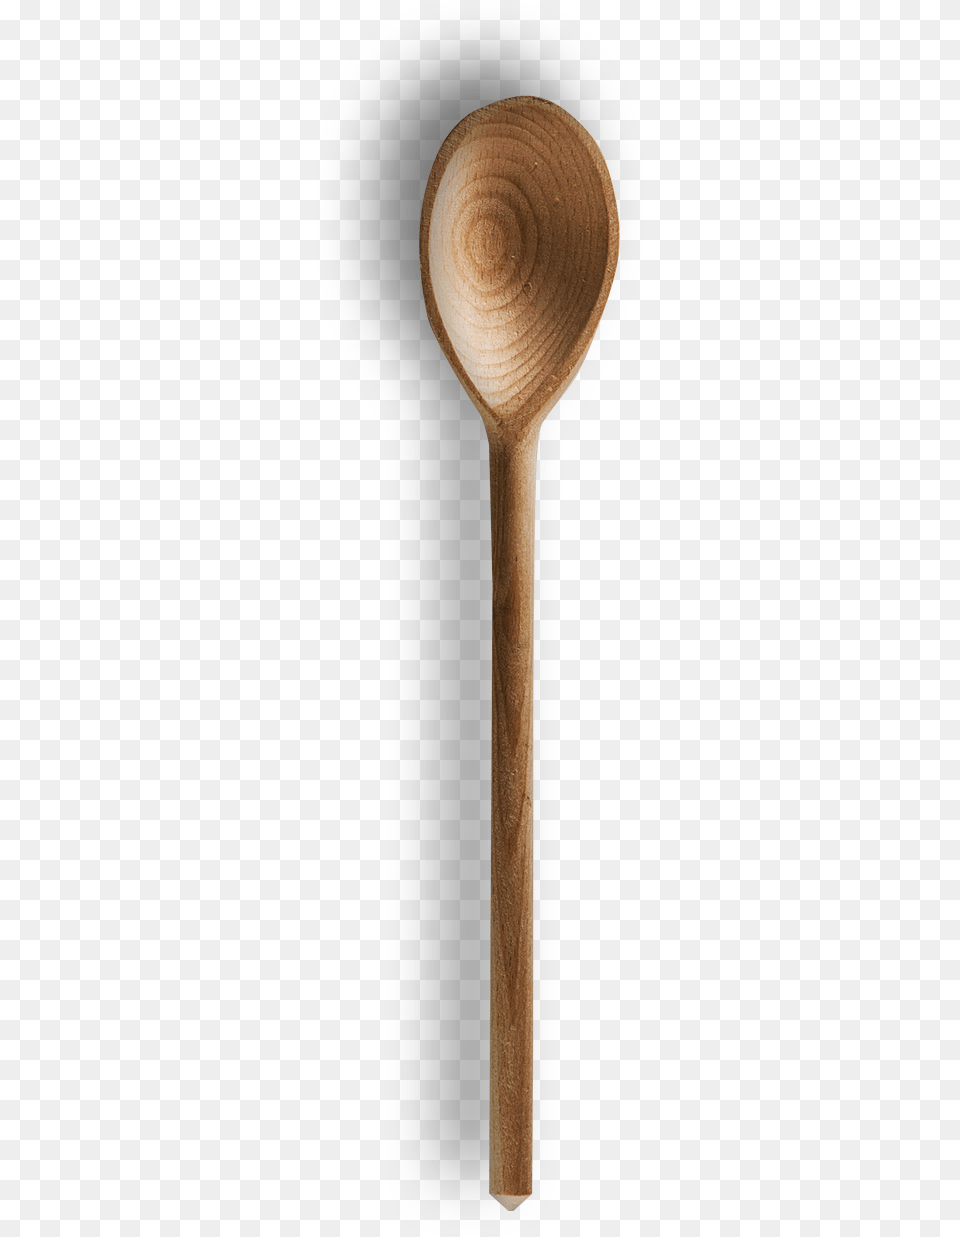 Cutlery, Spoon, Kitchen Utensil, Wooden Spoon Png Image